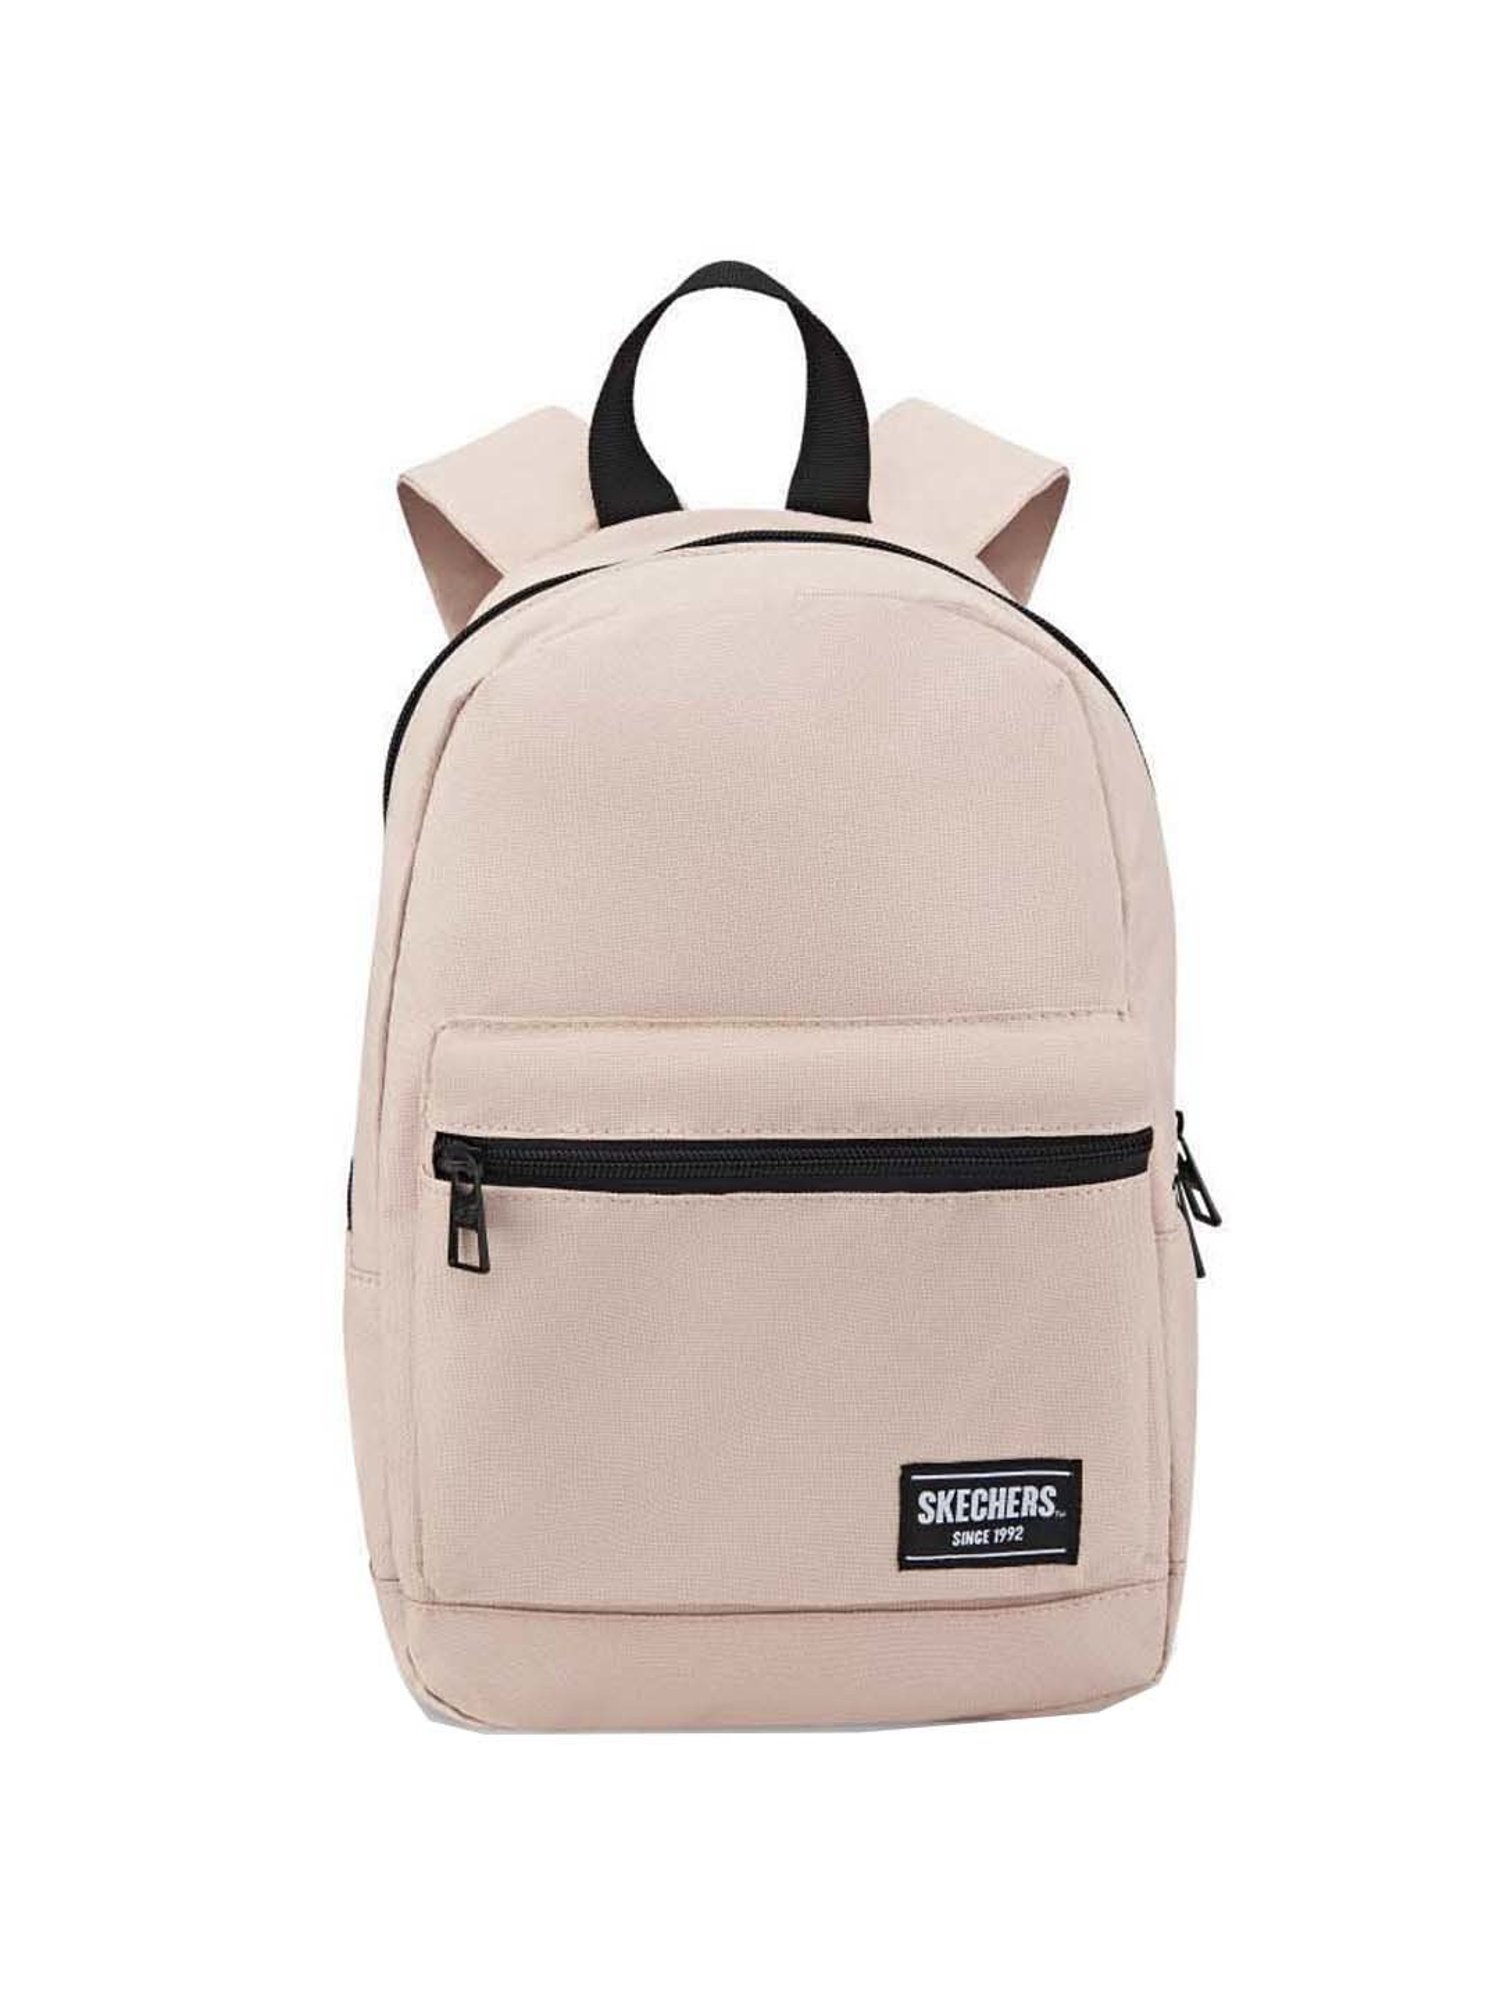 SKECHERS Backpacks  Buy SKECHERS Unisex Backpack  Brown Online  Nykaa  Fashion